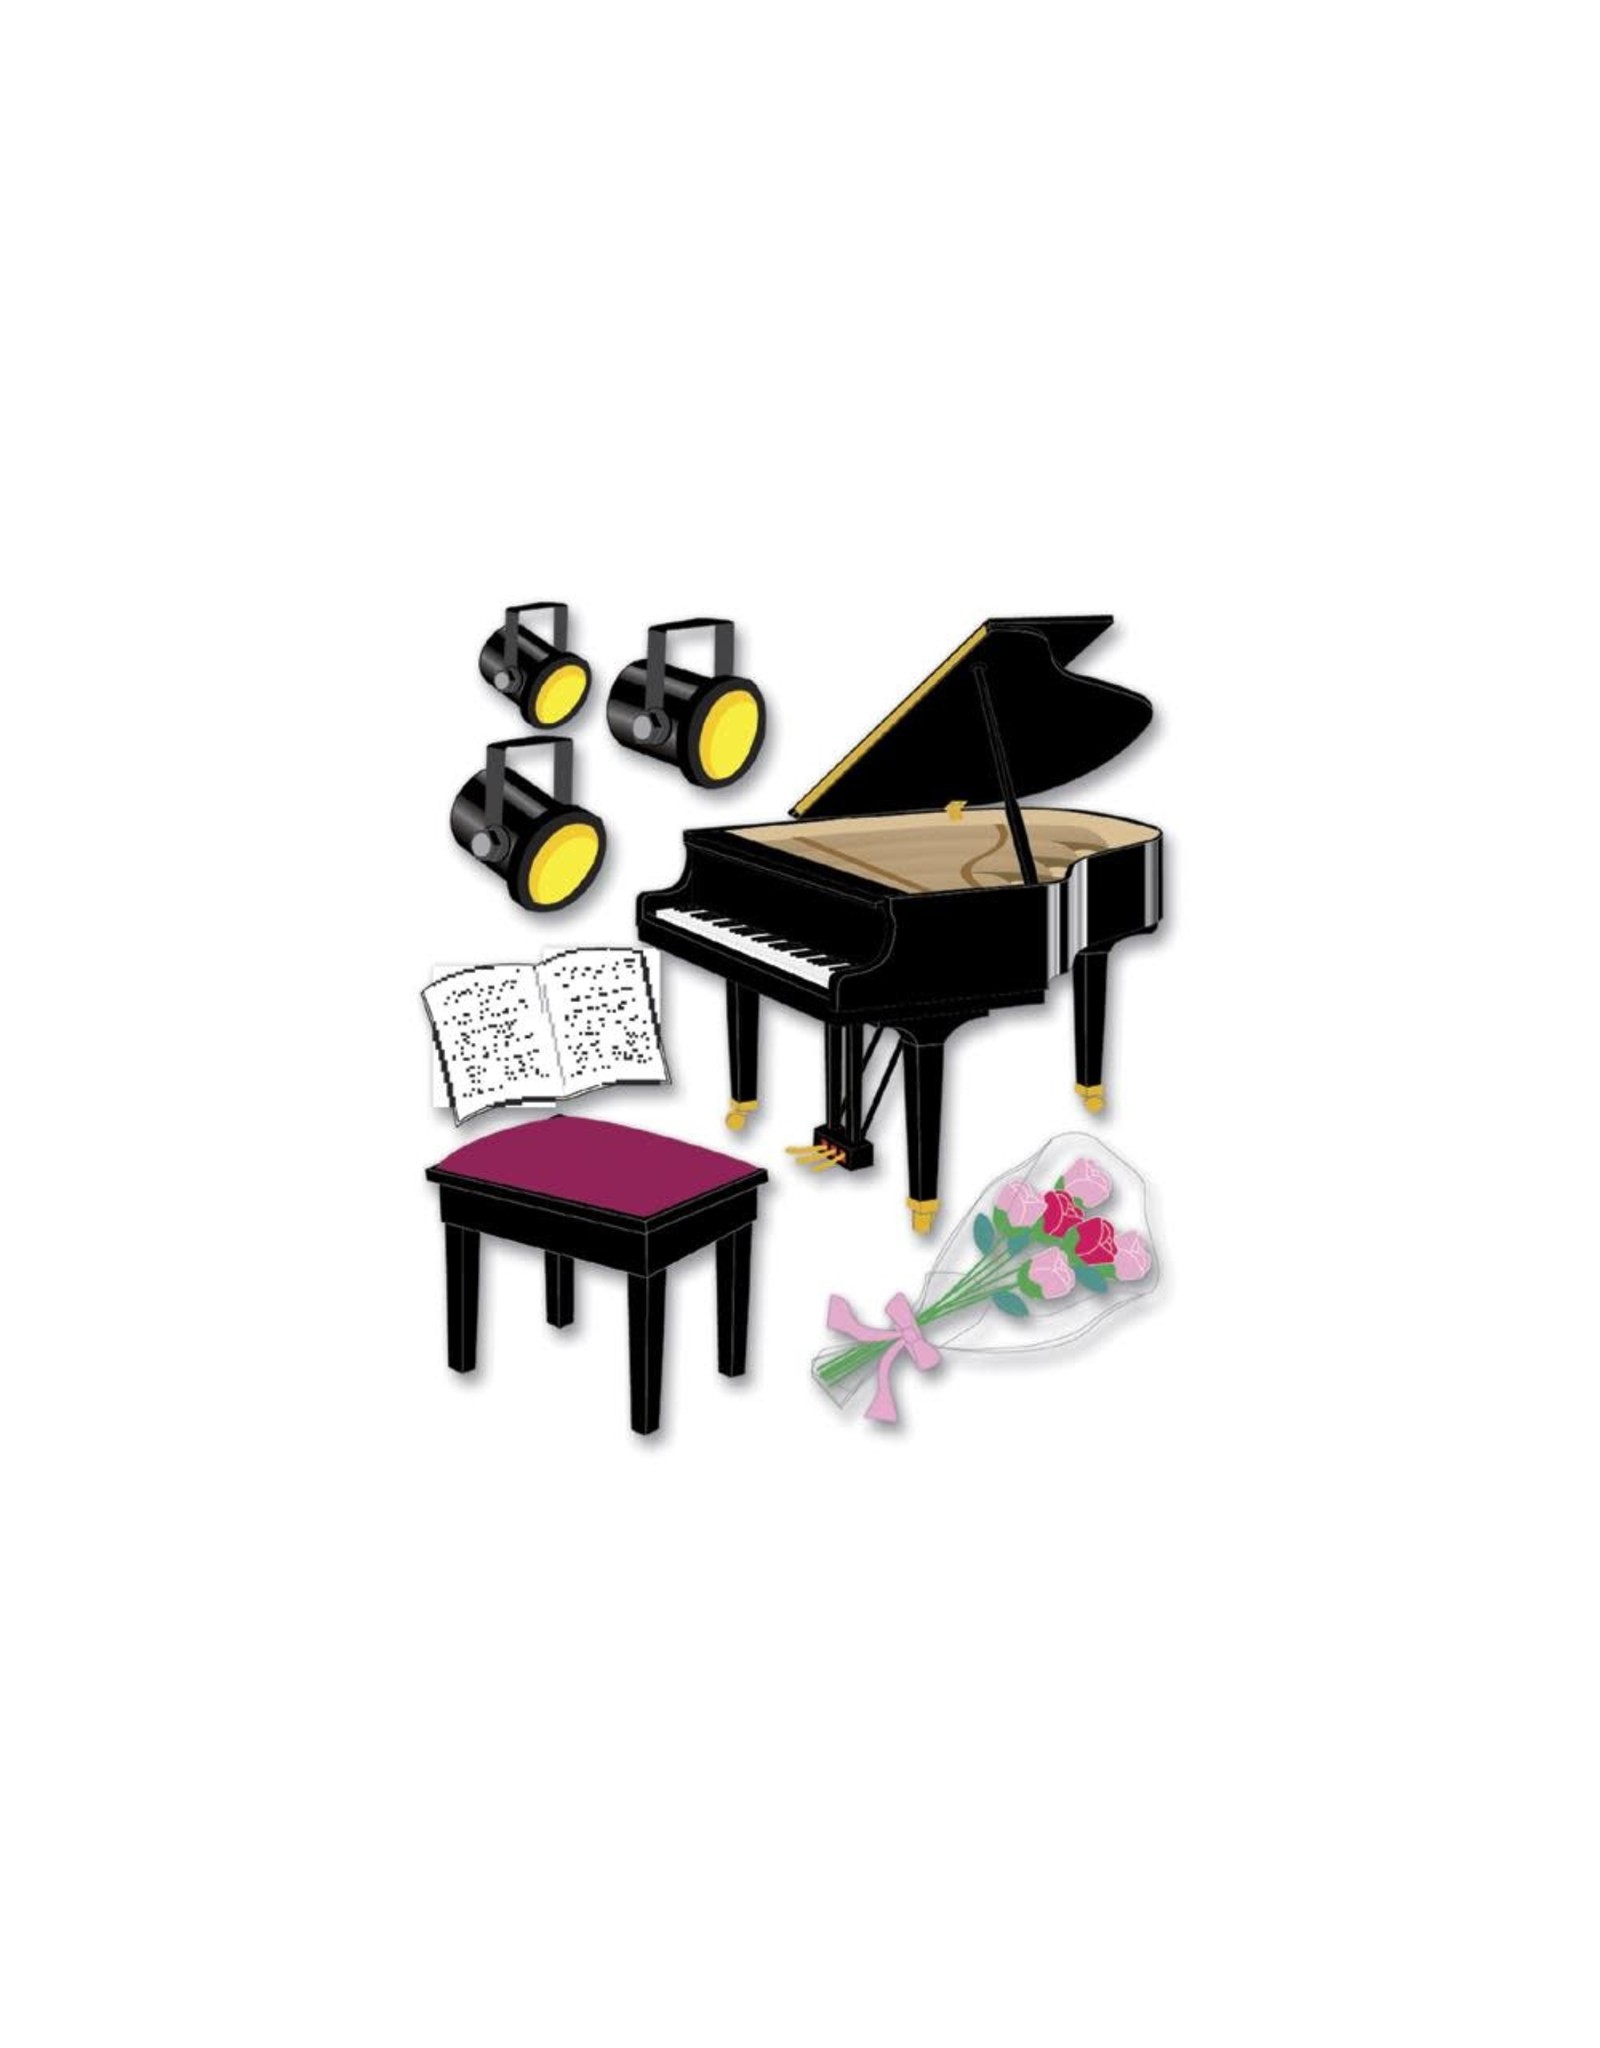 JOLEE’S JOLEE'S BOUTIQUE PIANO RECITAL DIMENSIONAL STICKERS